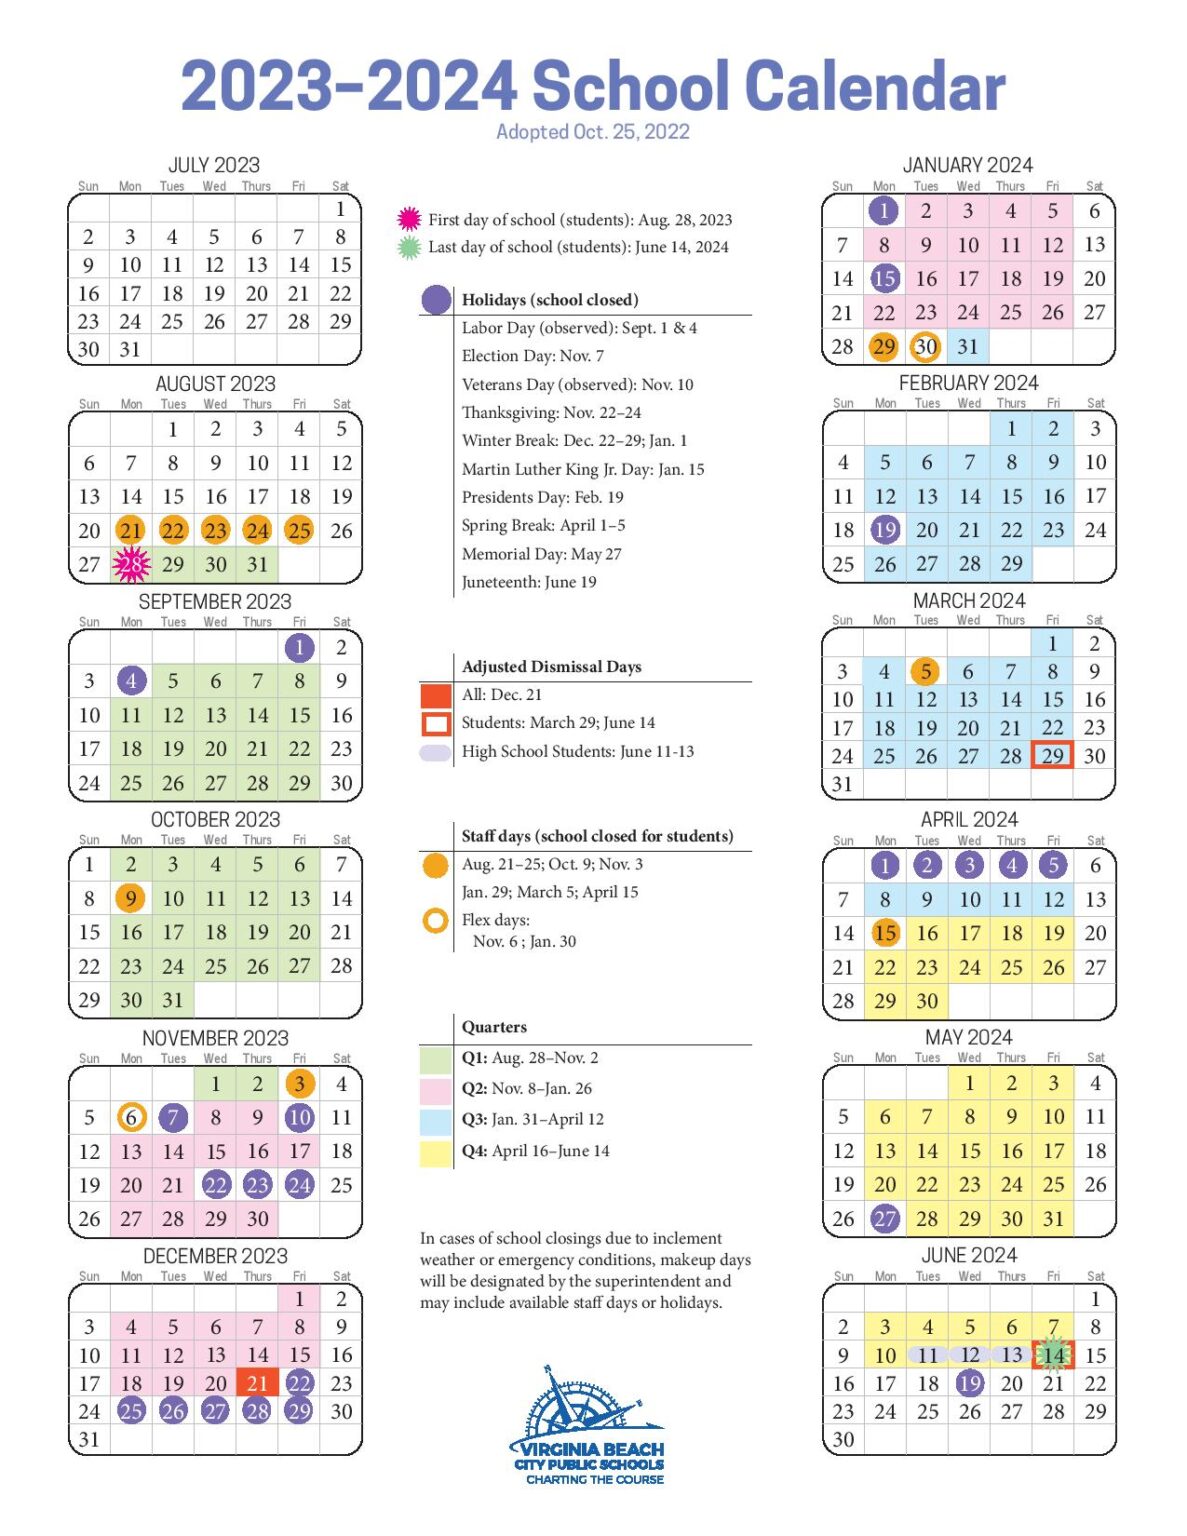 Virginia Beach City Public Schools Calendar 2023-2024 PDF